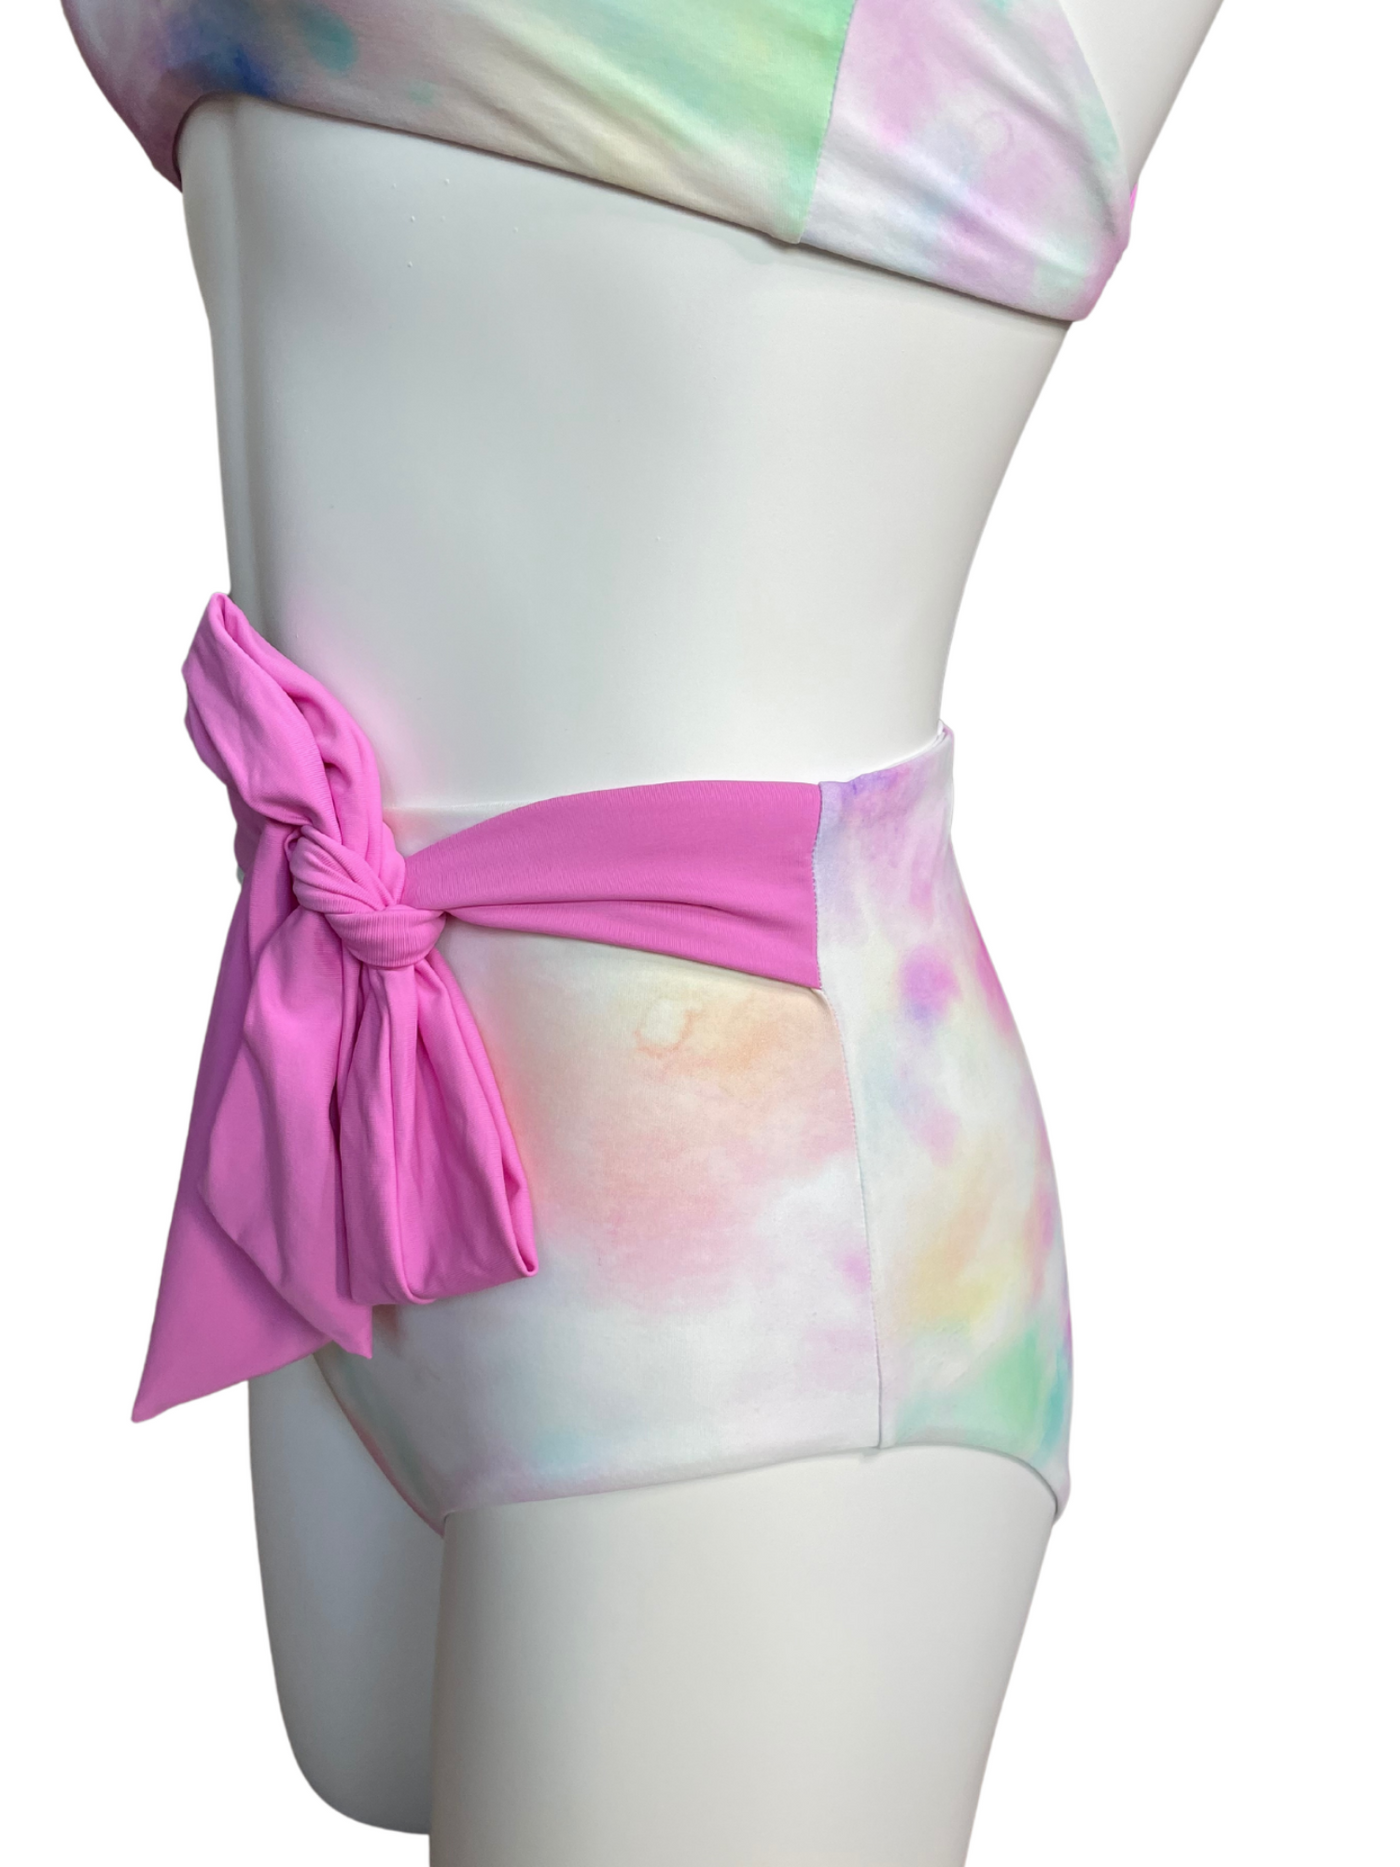 Navalora Matching Swimsuits Women's Cotton Candy Tie Dye High Rise Bikini Bottom with Bow